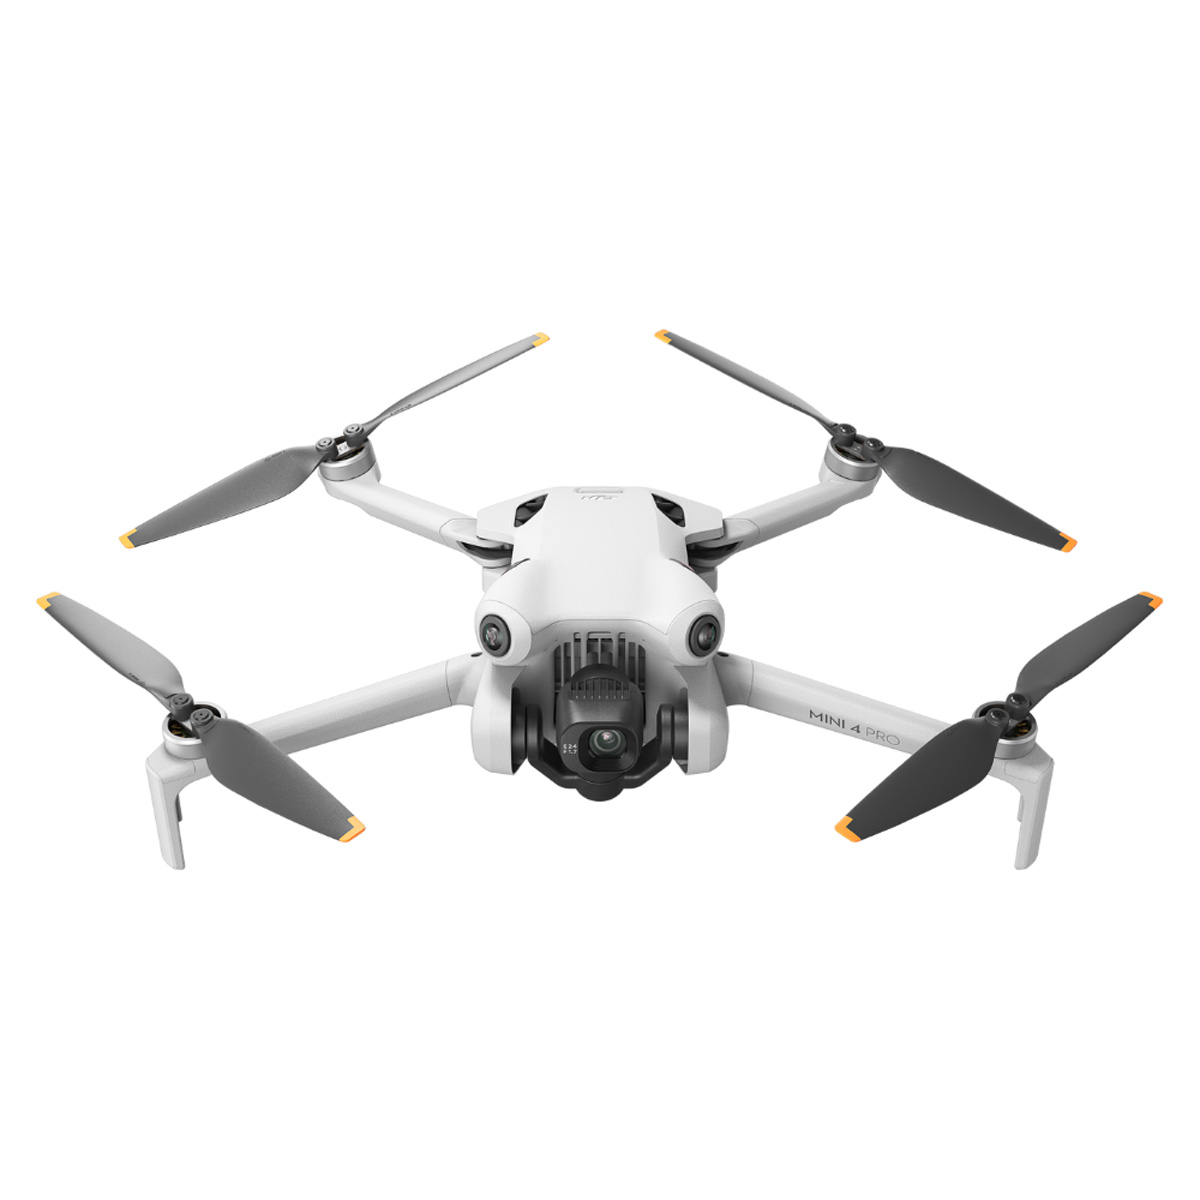 "DJI Mini 4 Pro" drone aircraft